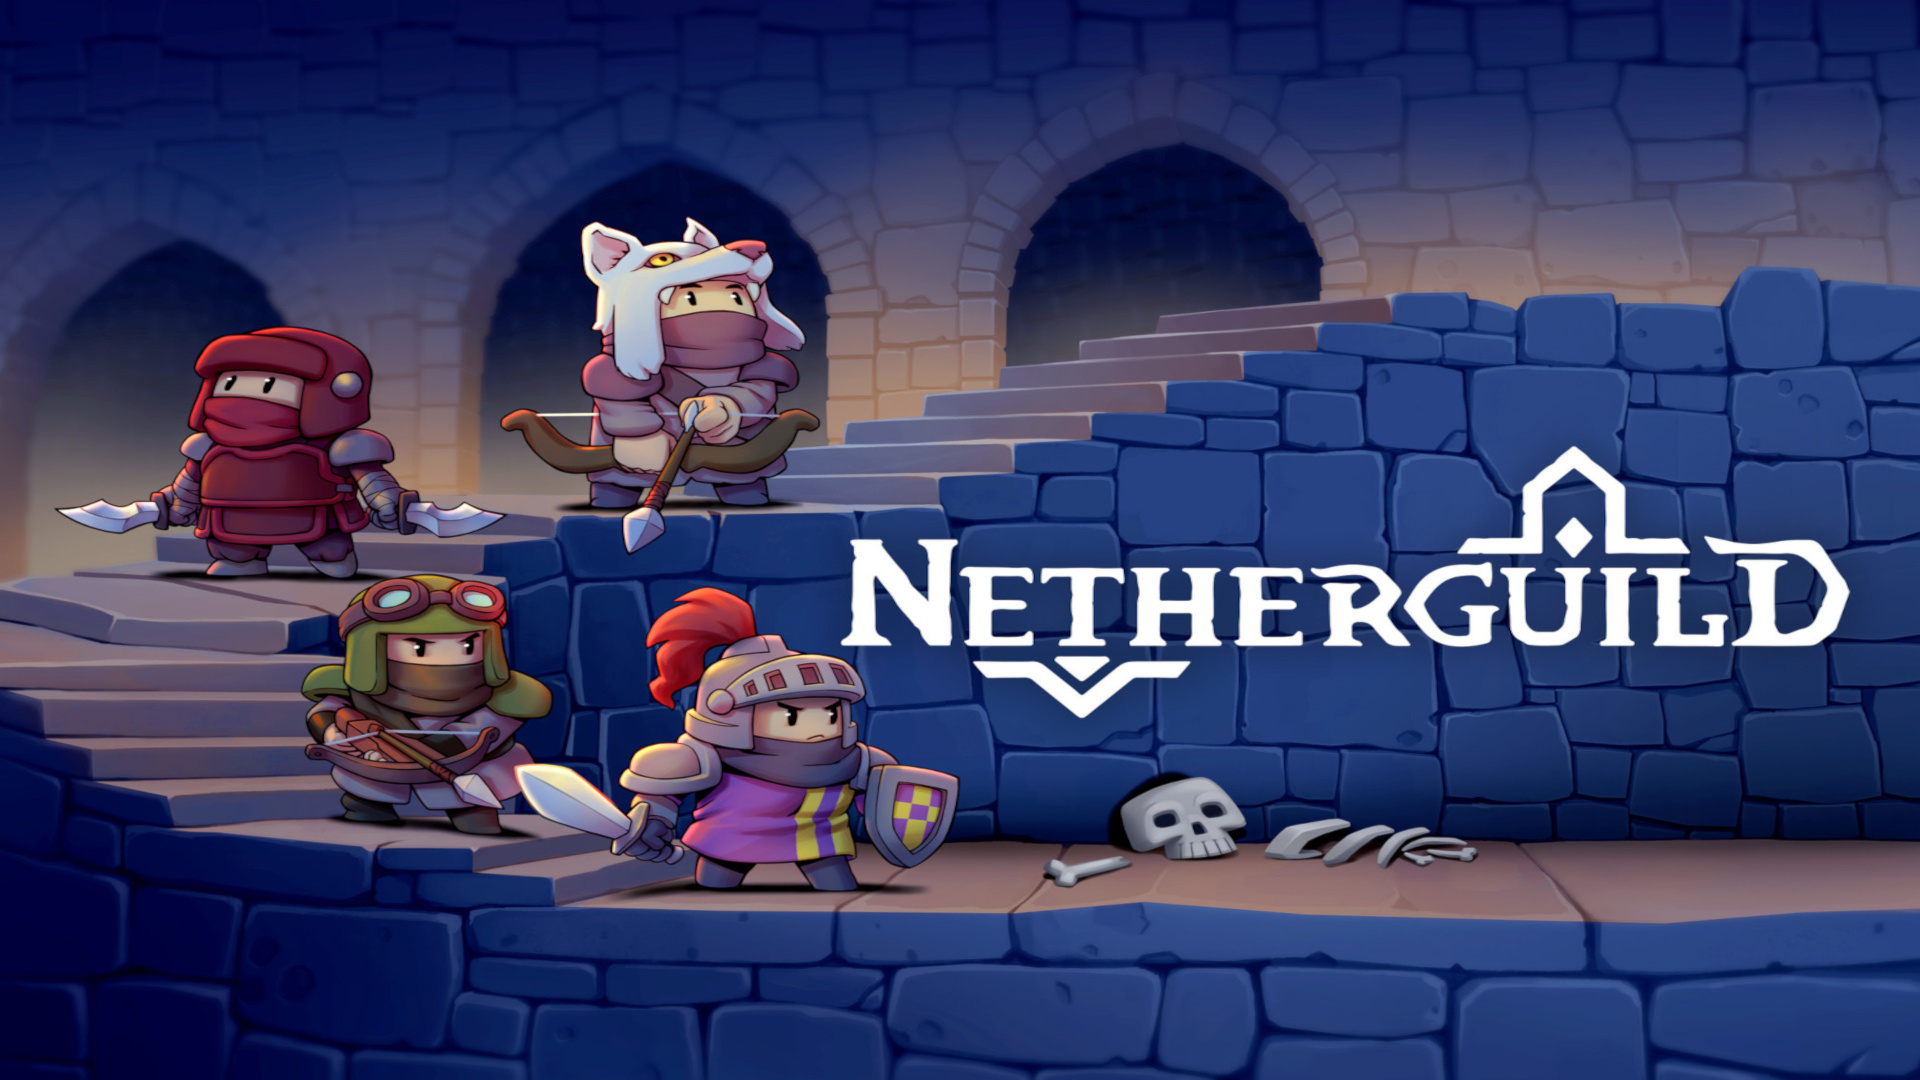 Netherguild – Developer Interview